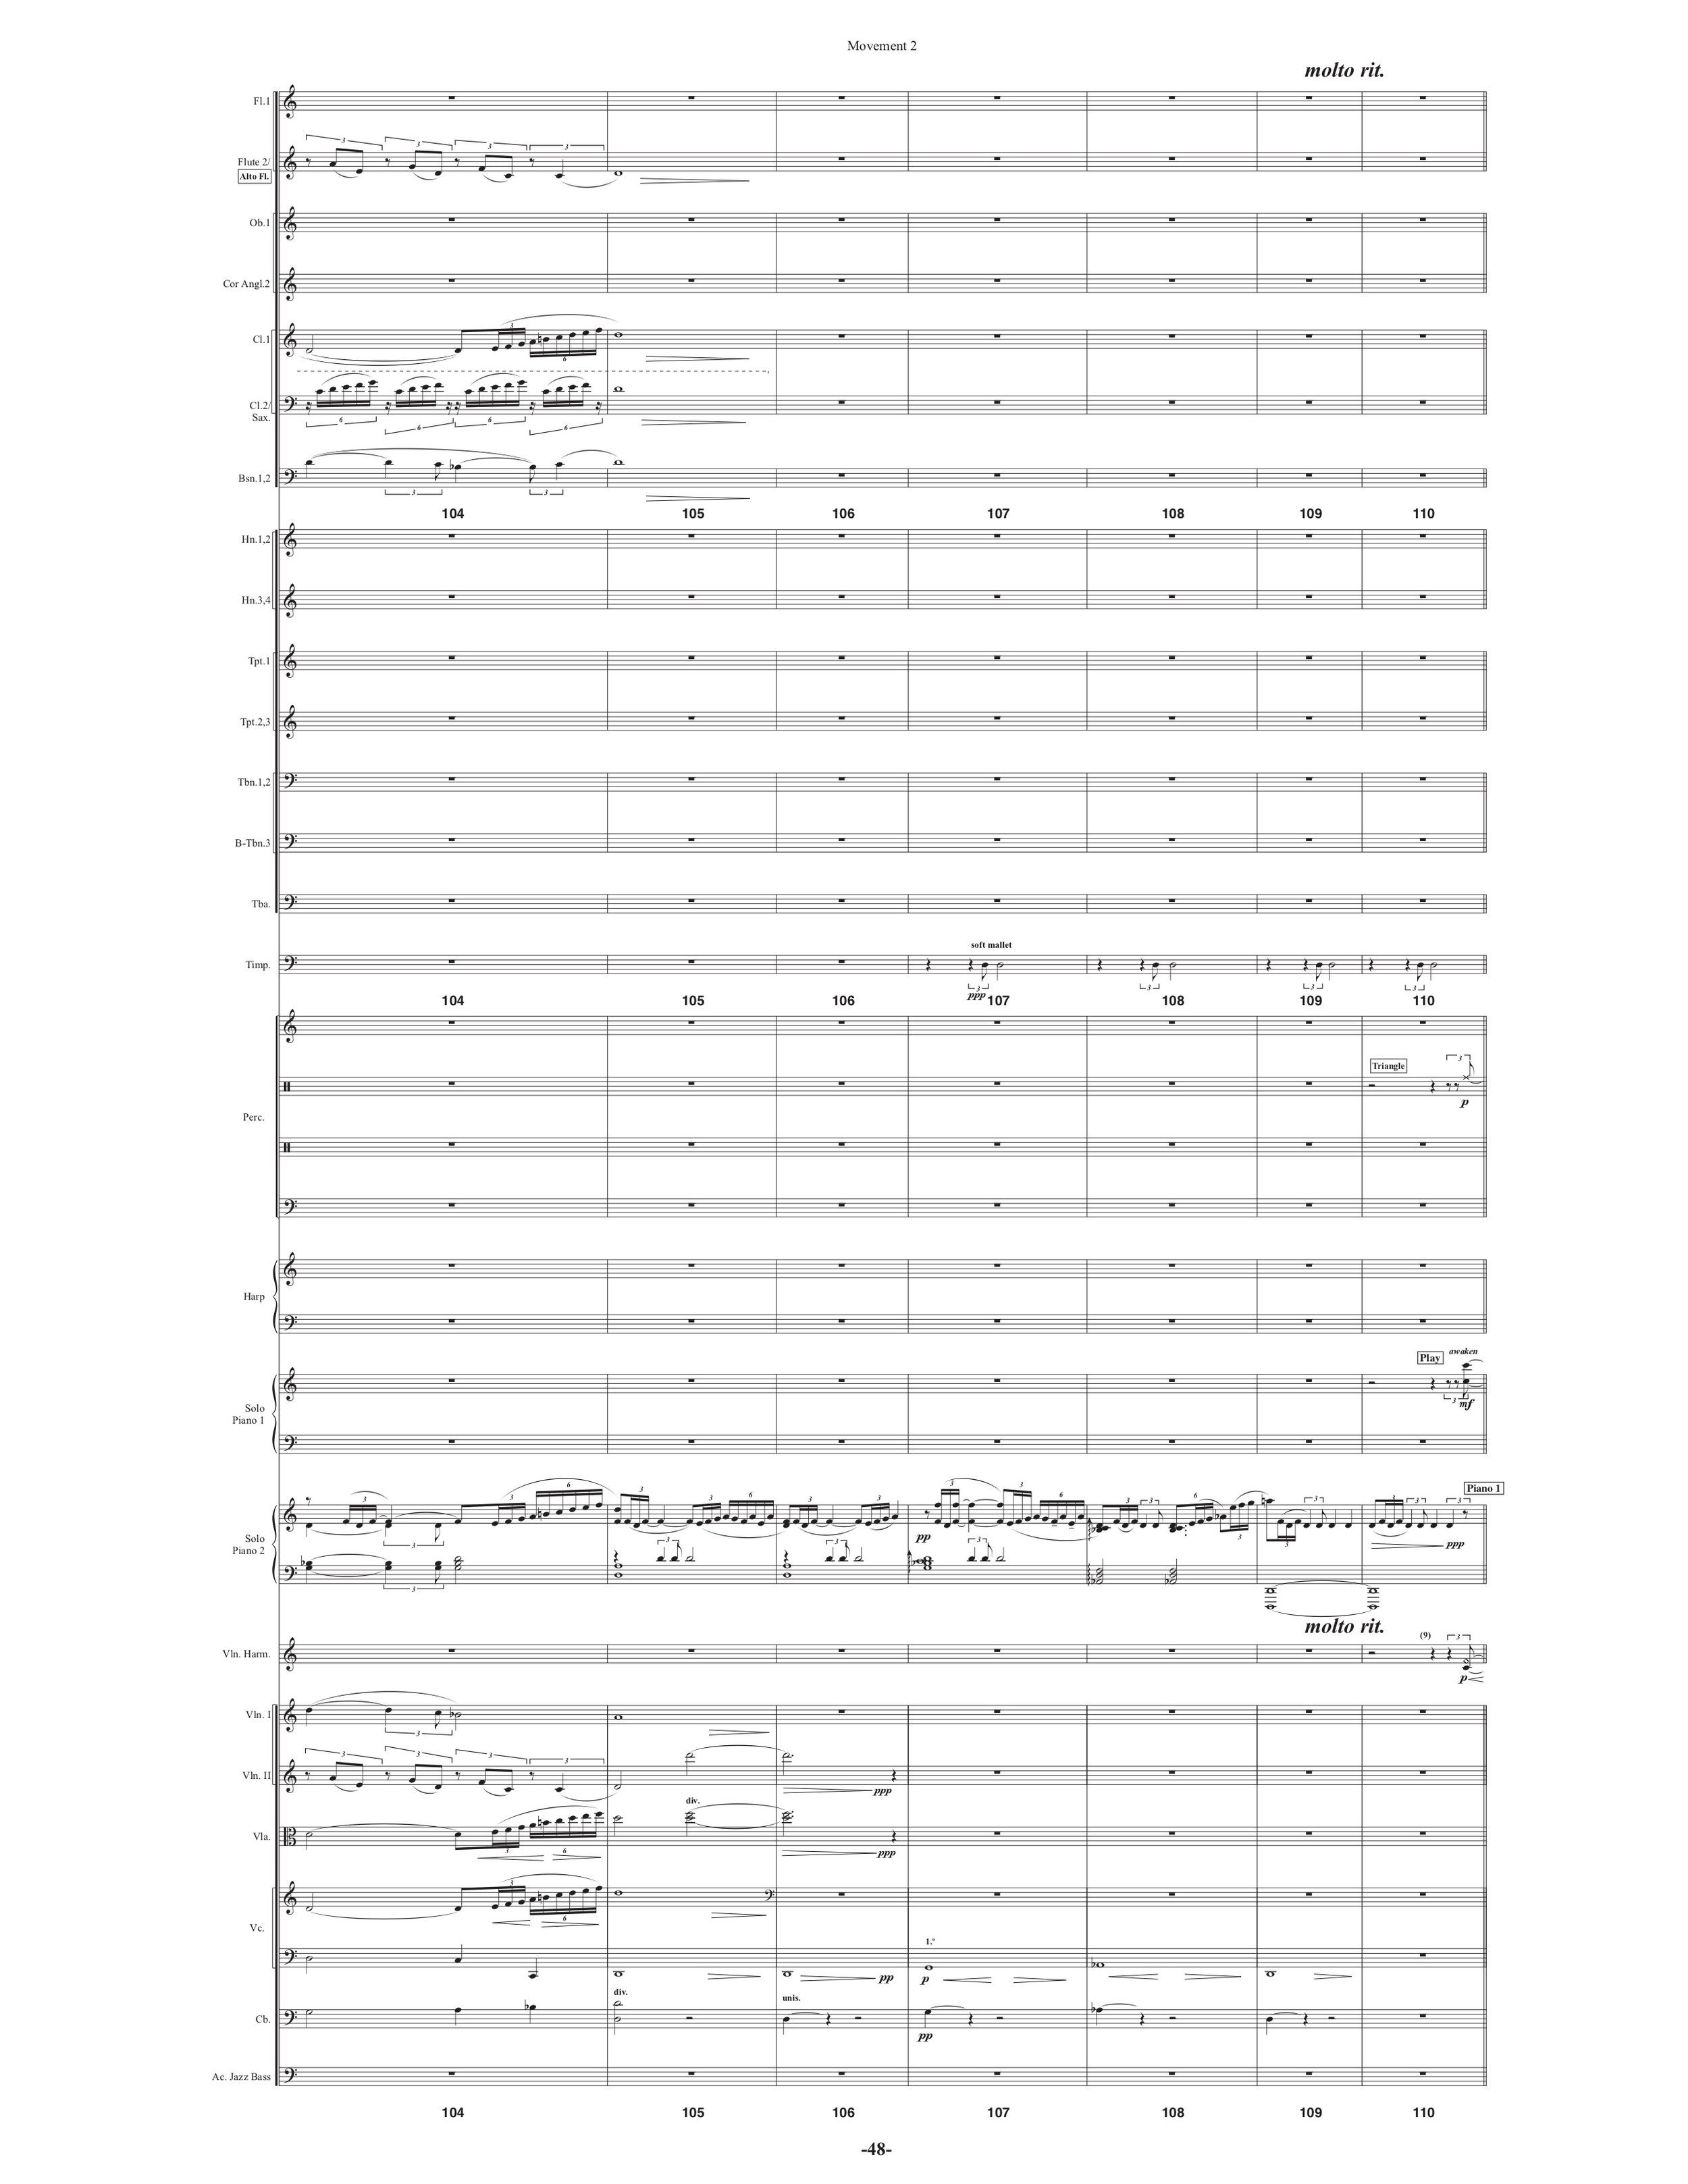 Symphony_Orch & 2 Pianos p53.jpg